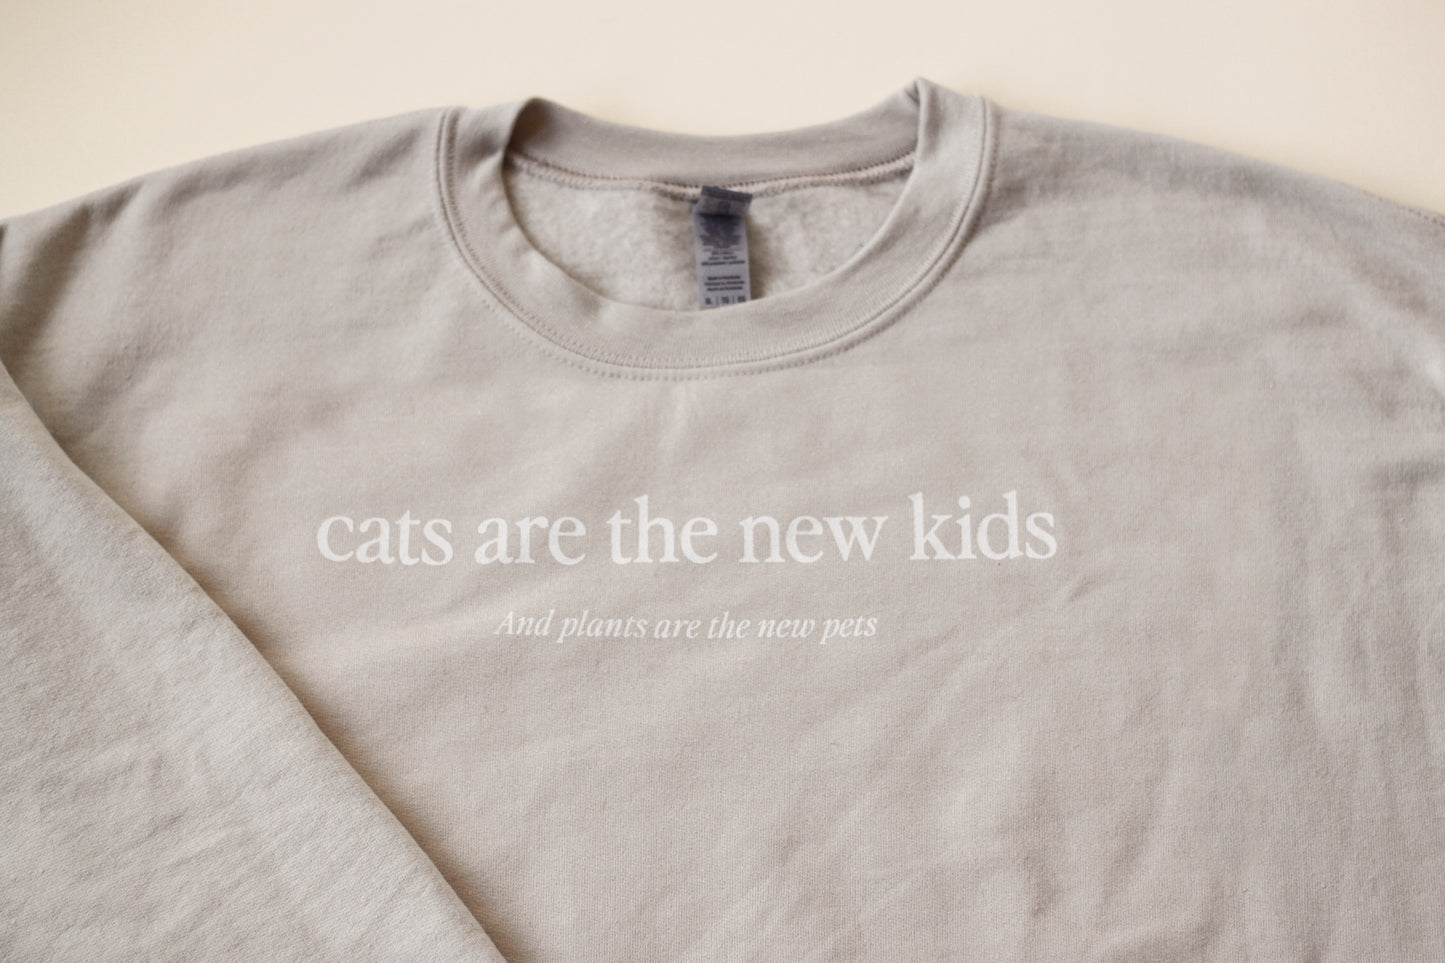 Bloire | Sweatshirt So Nineties  | for Cat Lovers